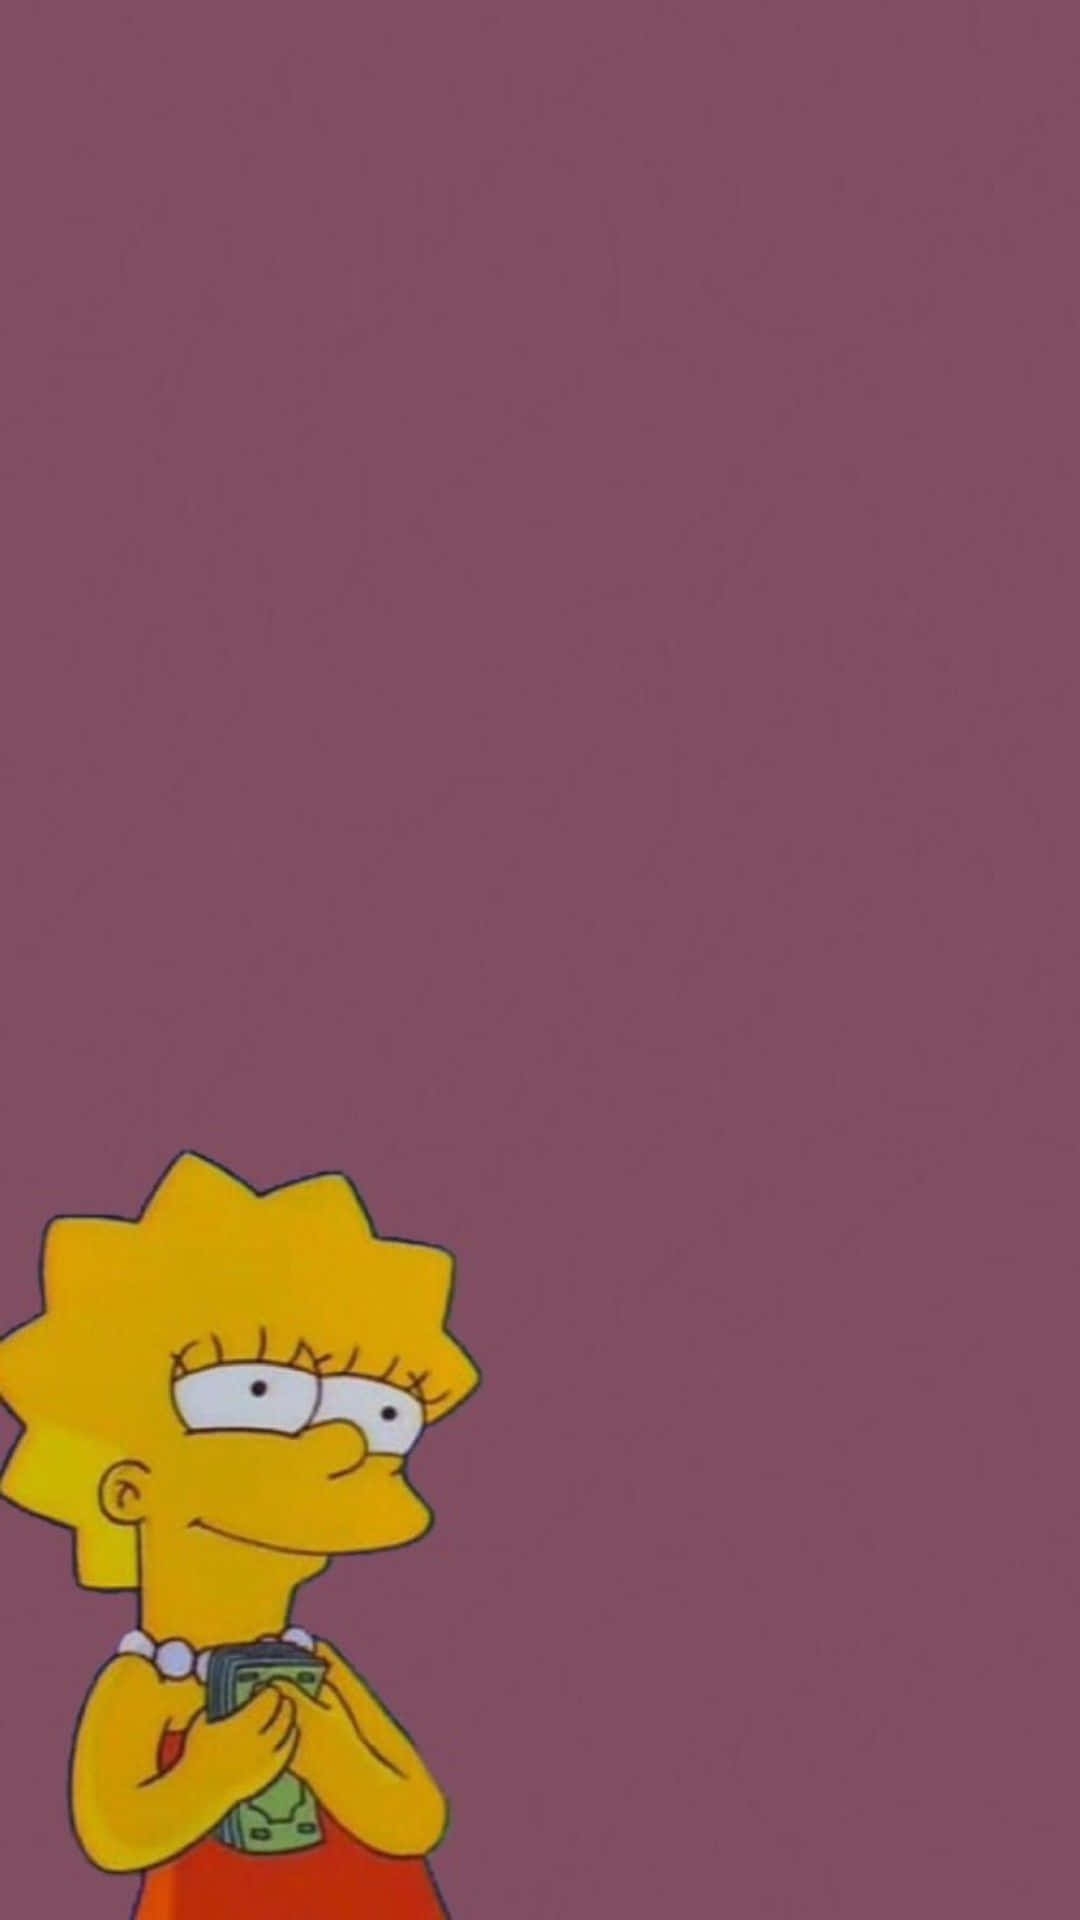 Download Simpsons Aesthetic Wallpaper 